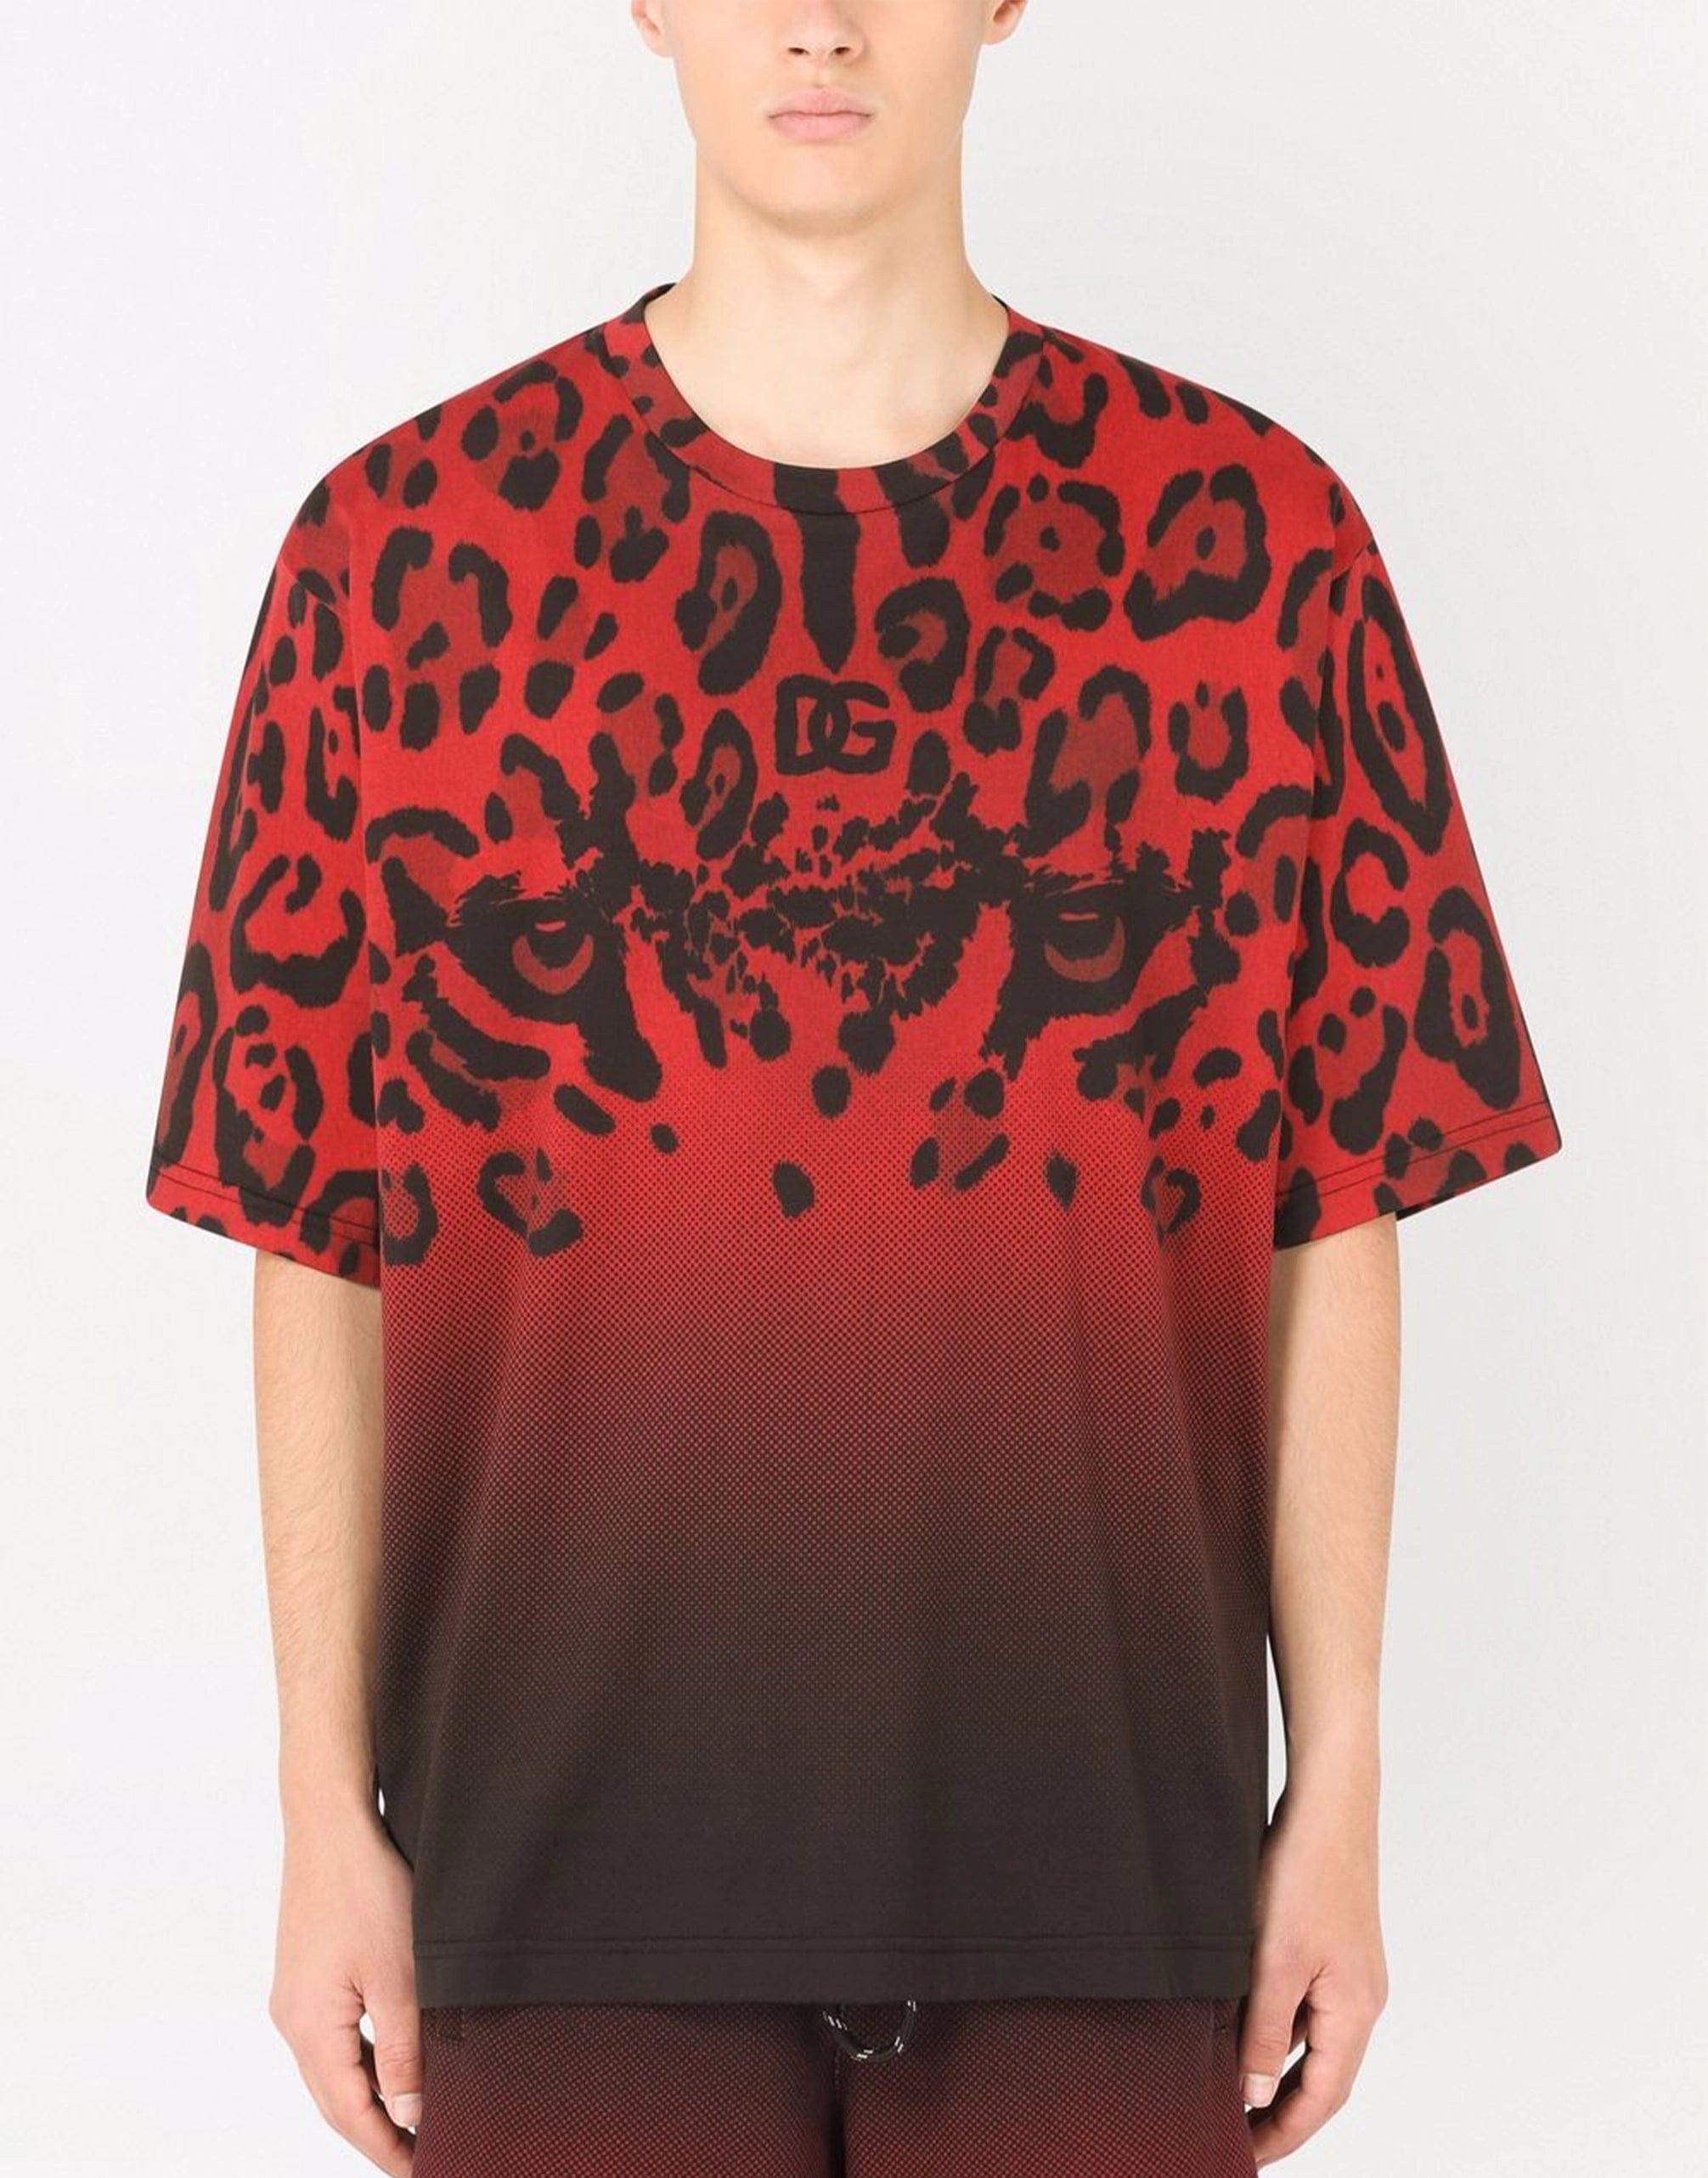 Camiseta de estampado de leopardo